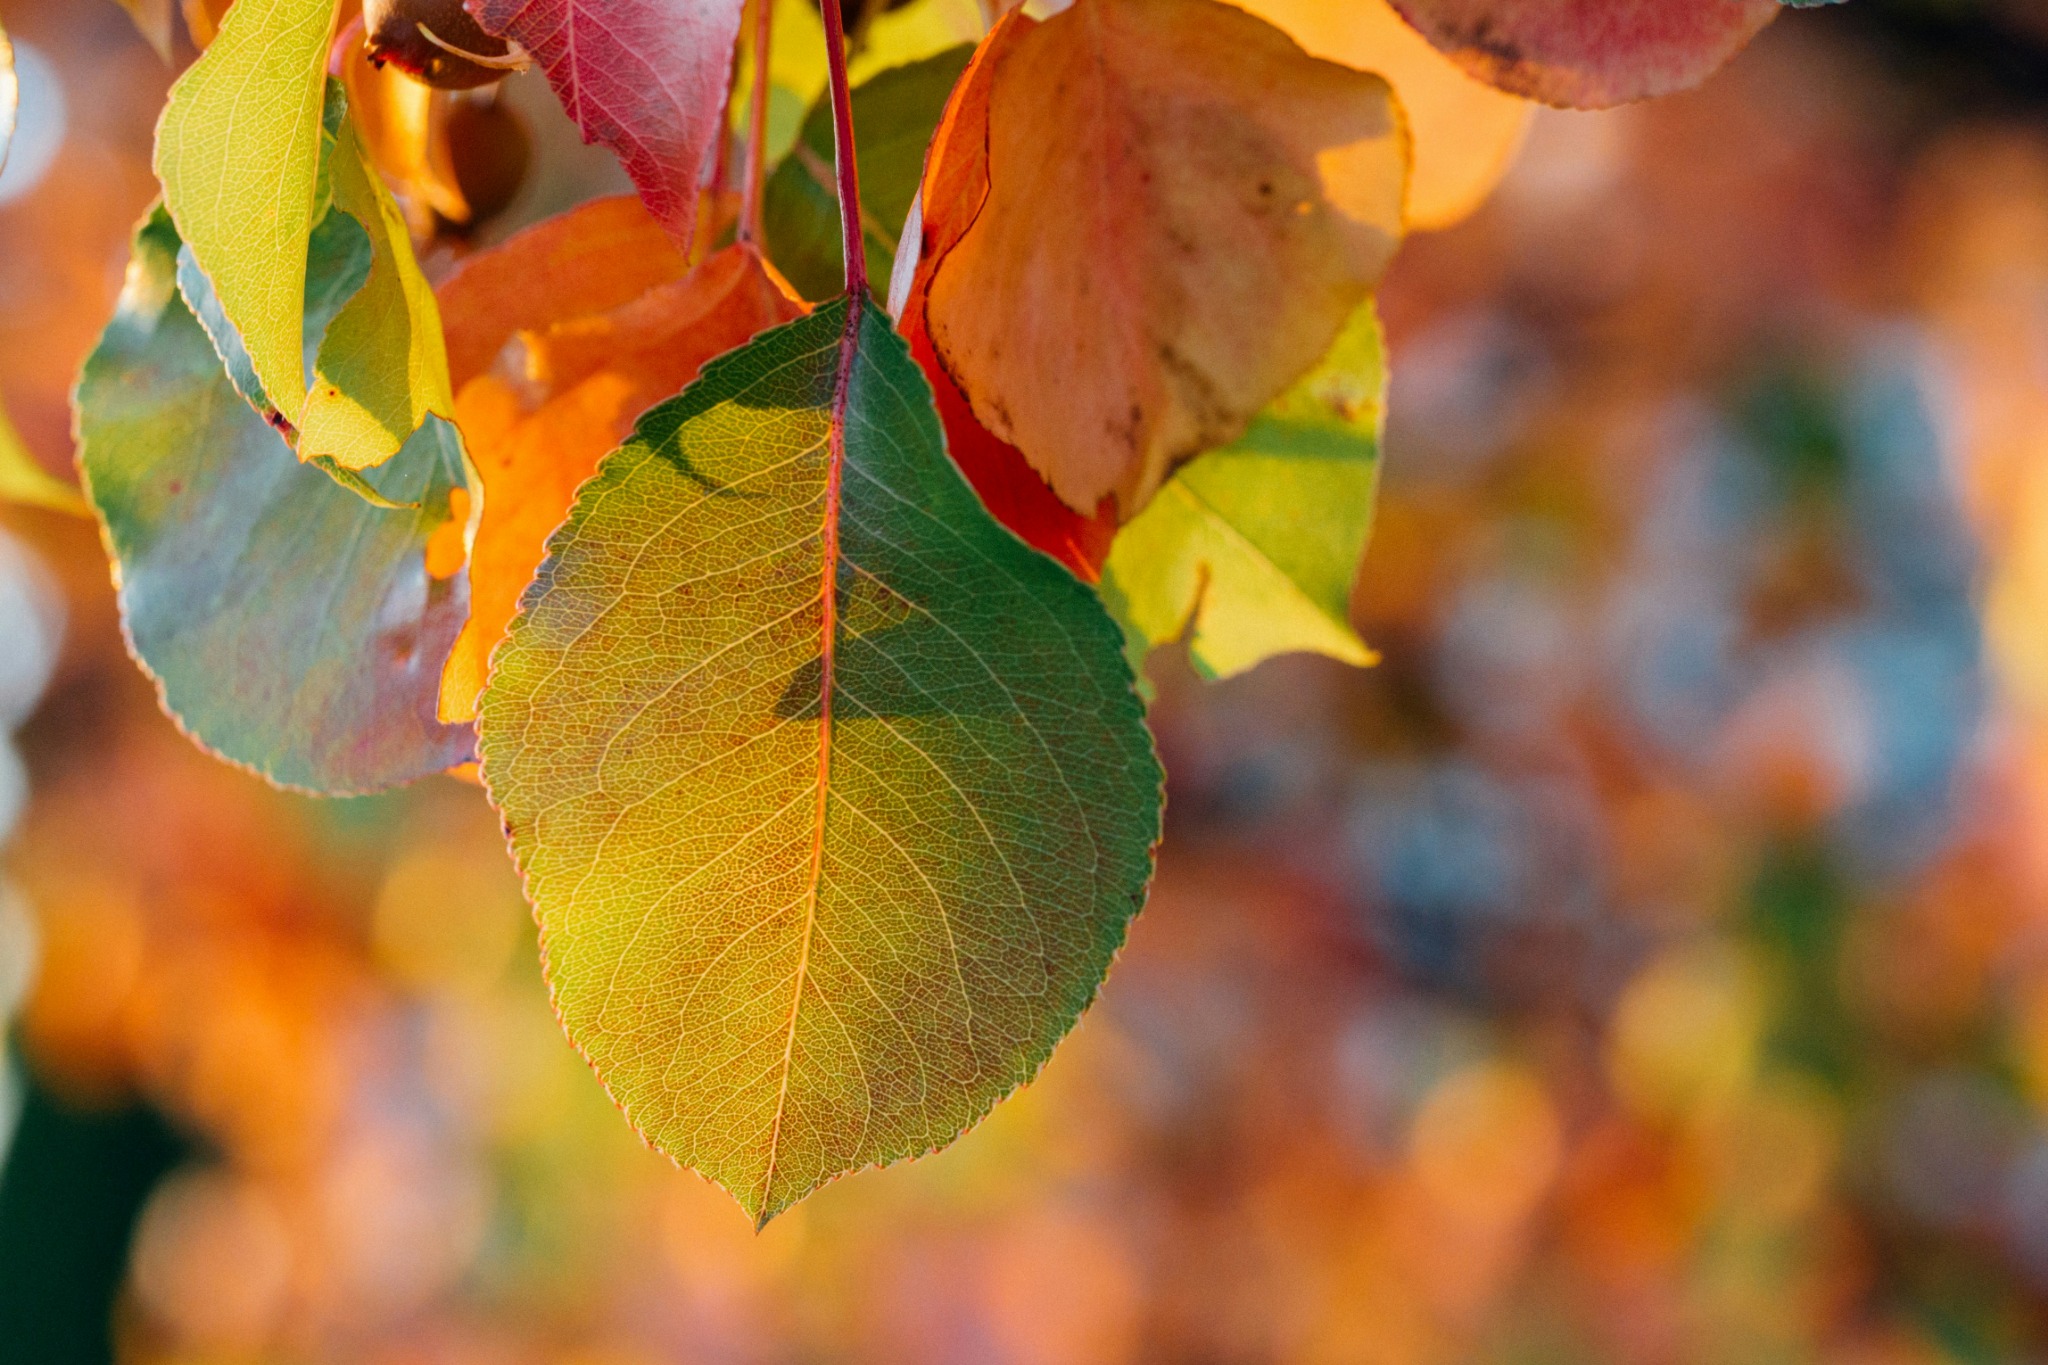 Autumn leaves detail